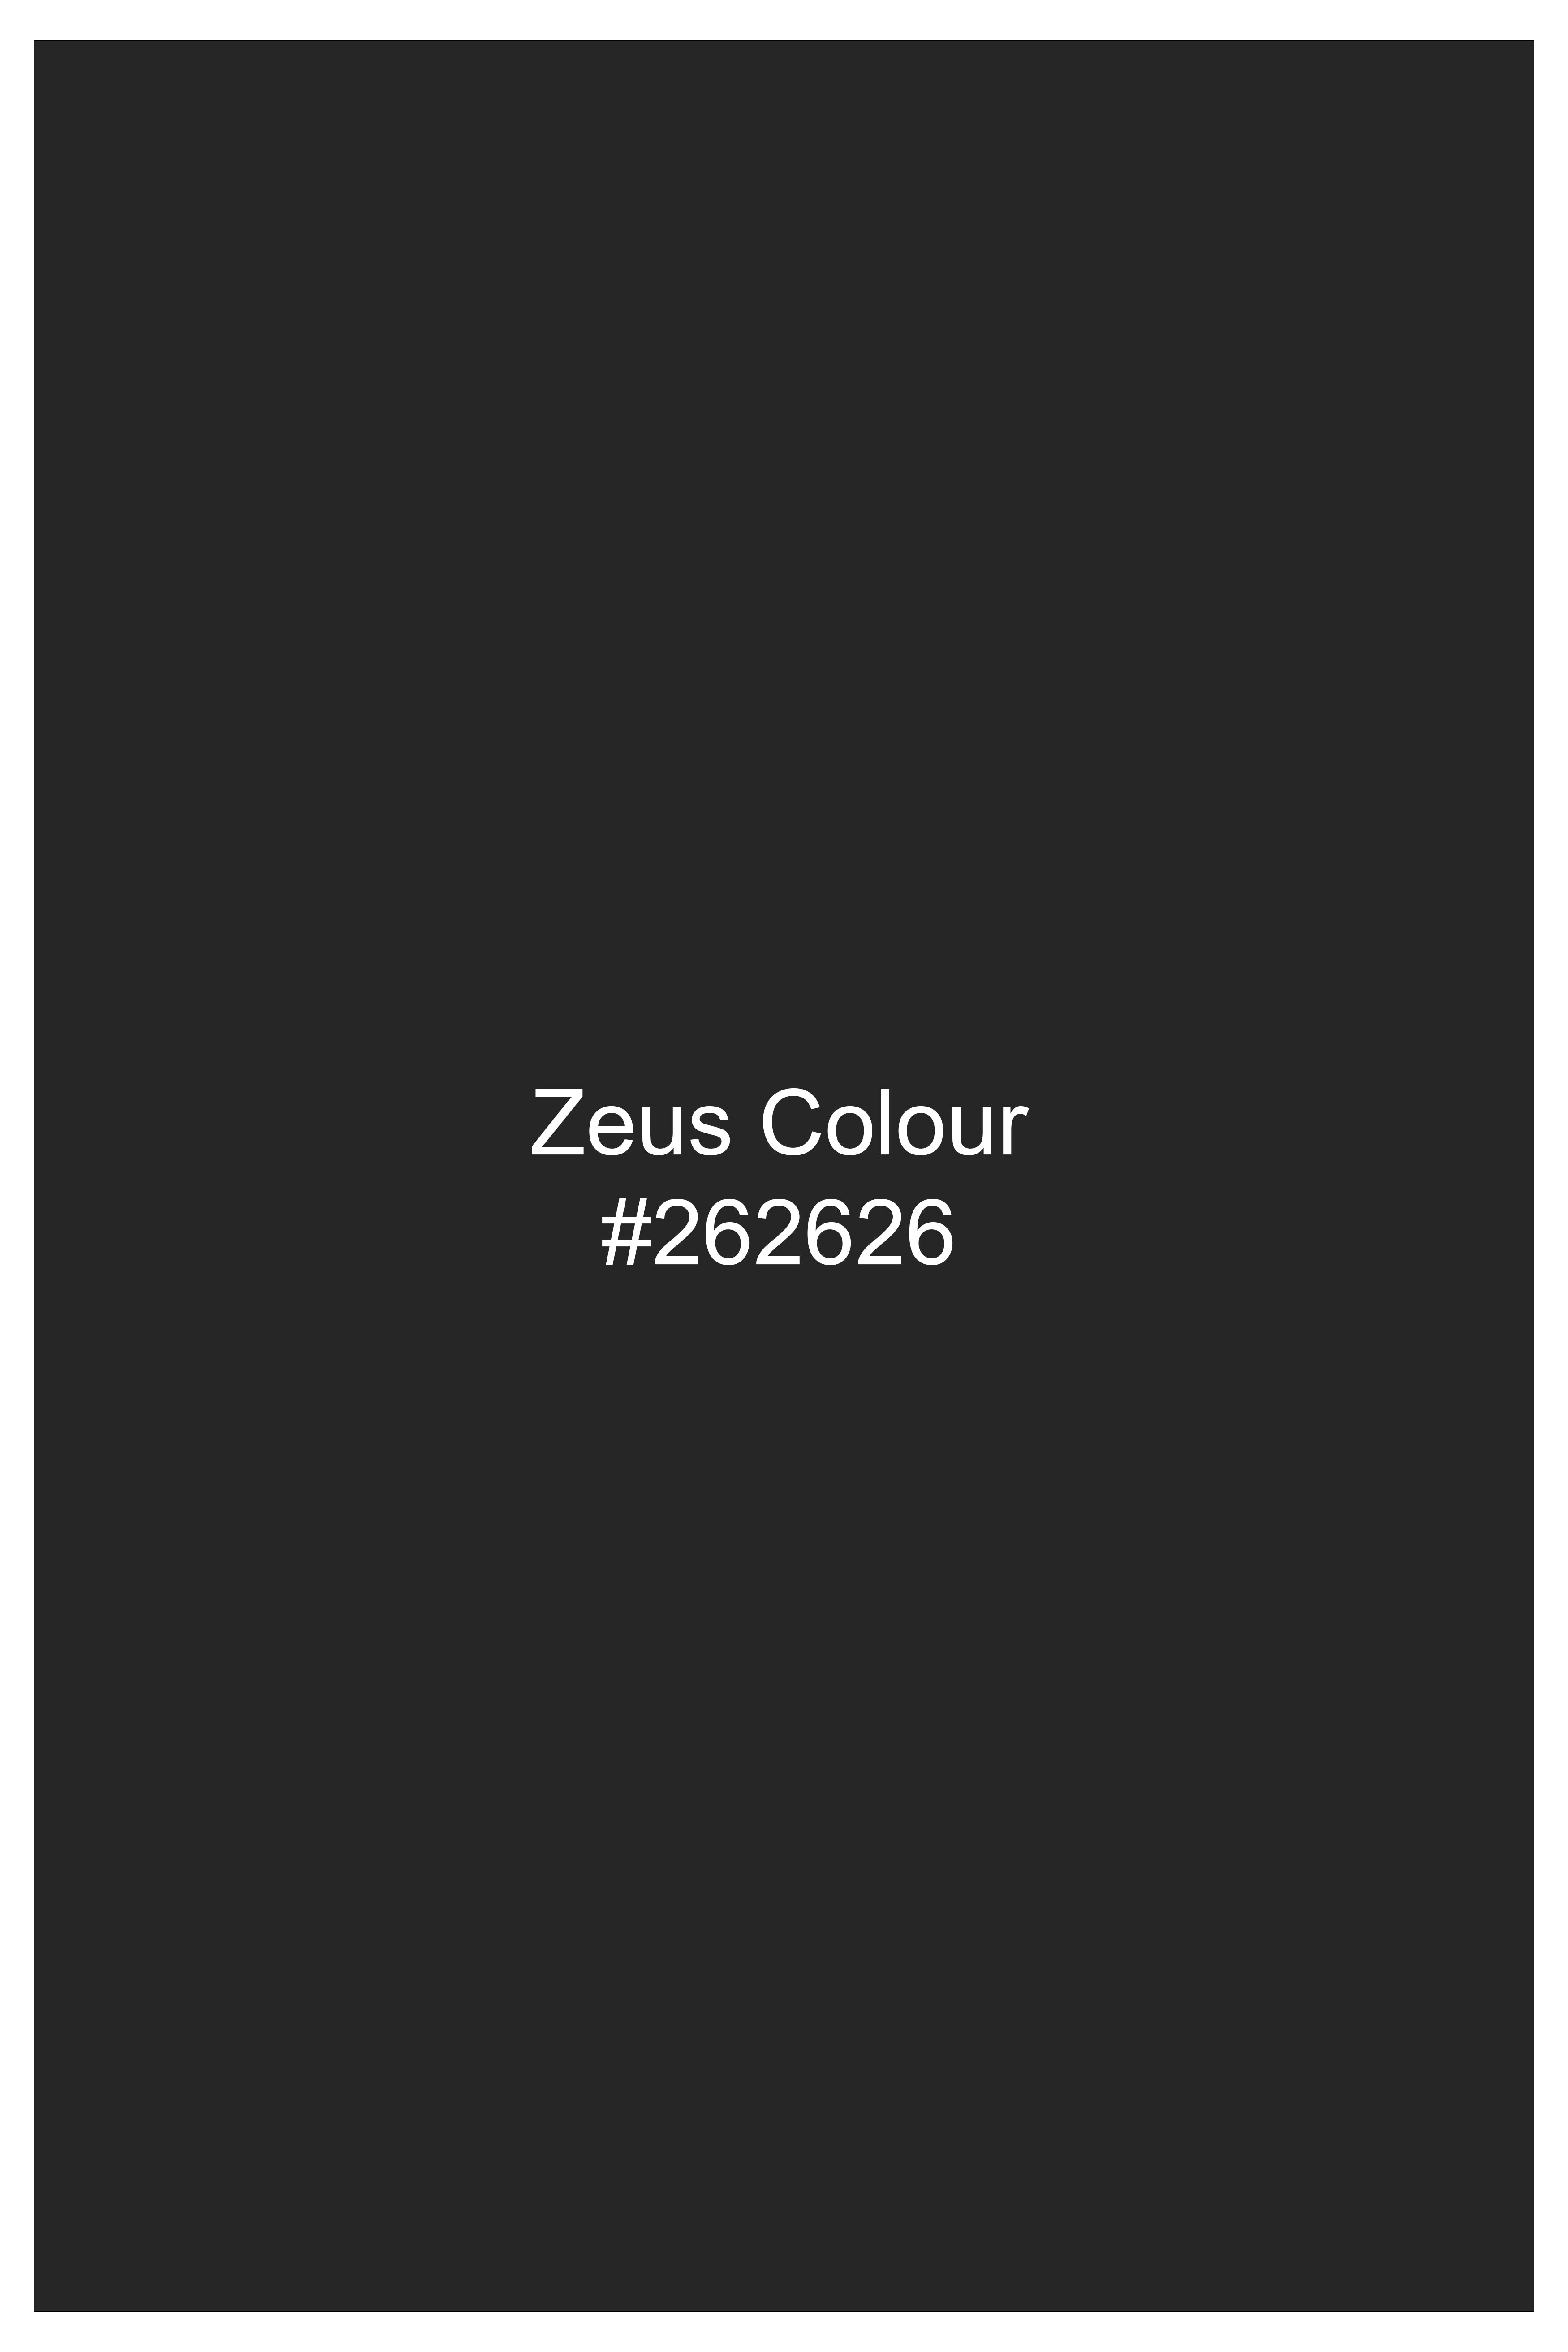 Zeus Dark Brown Plaid Tweed Suit